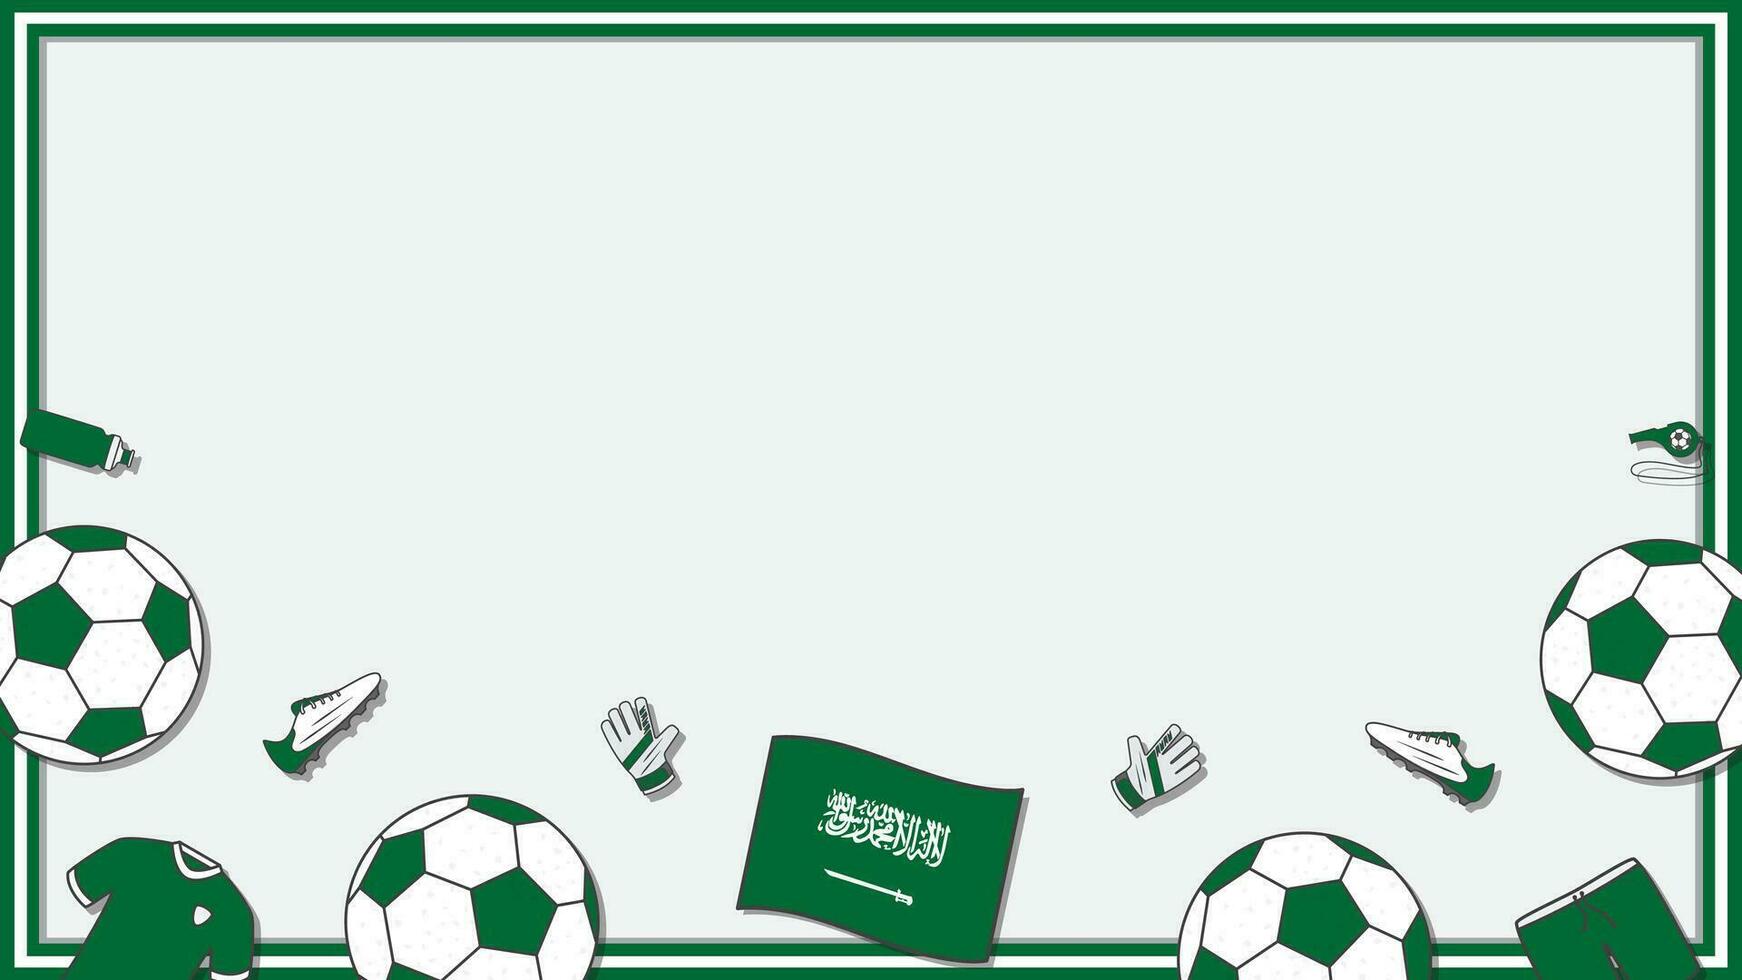 Football Background Design Template. Football Cartoon Vector Illustration. Soccer In Saudi Arabia